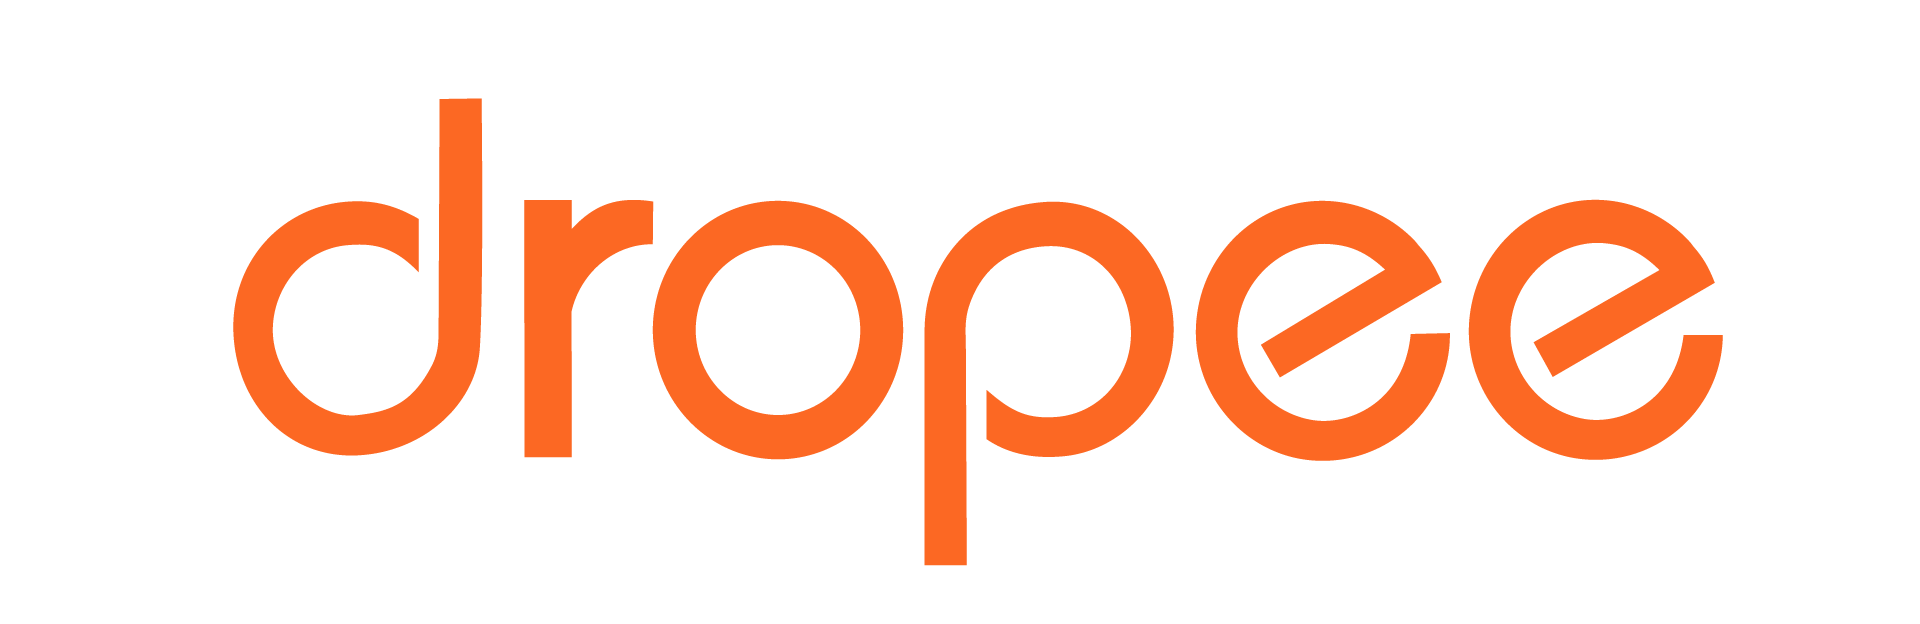 logo-dropee-orange-1